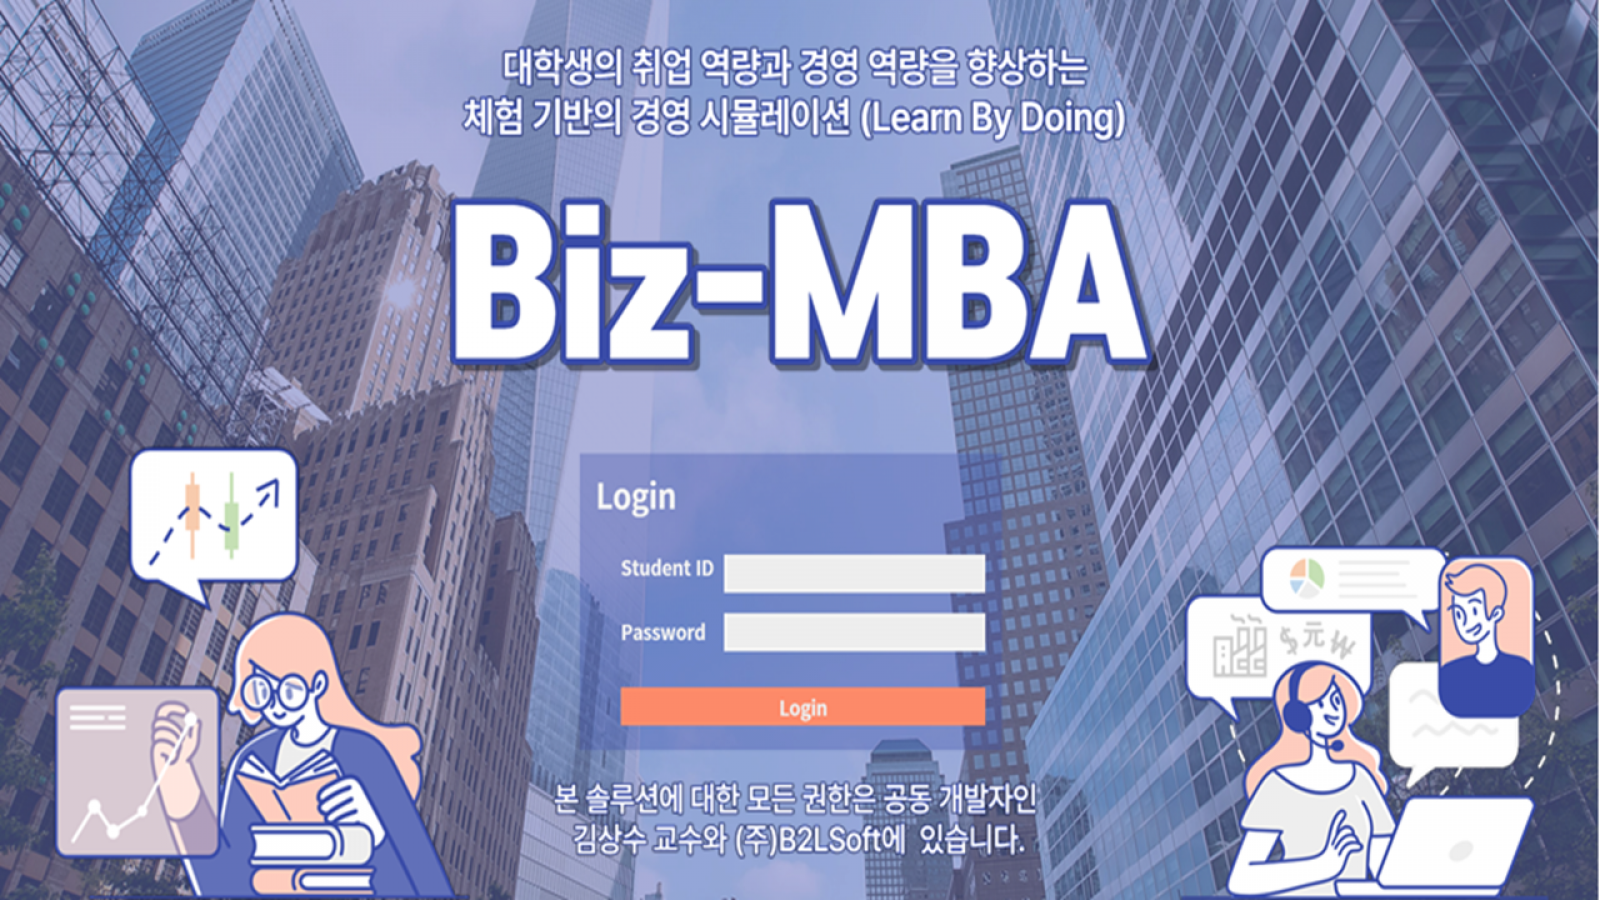 BIZ-MBA 대학 및 취업 과정